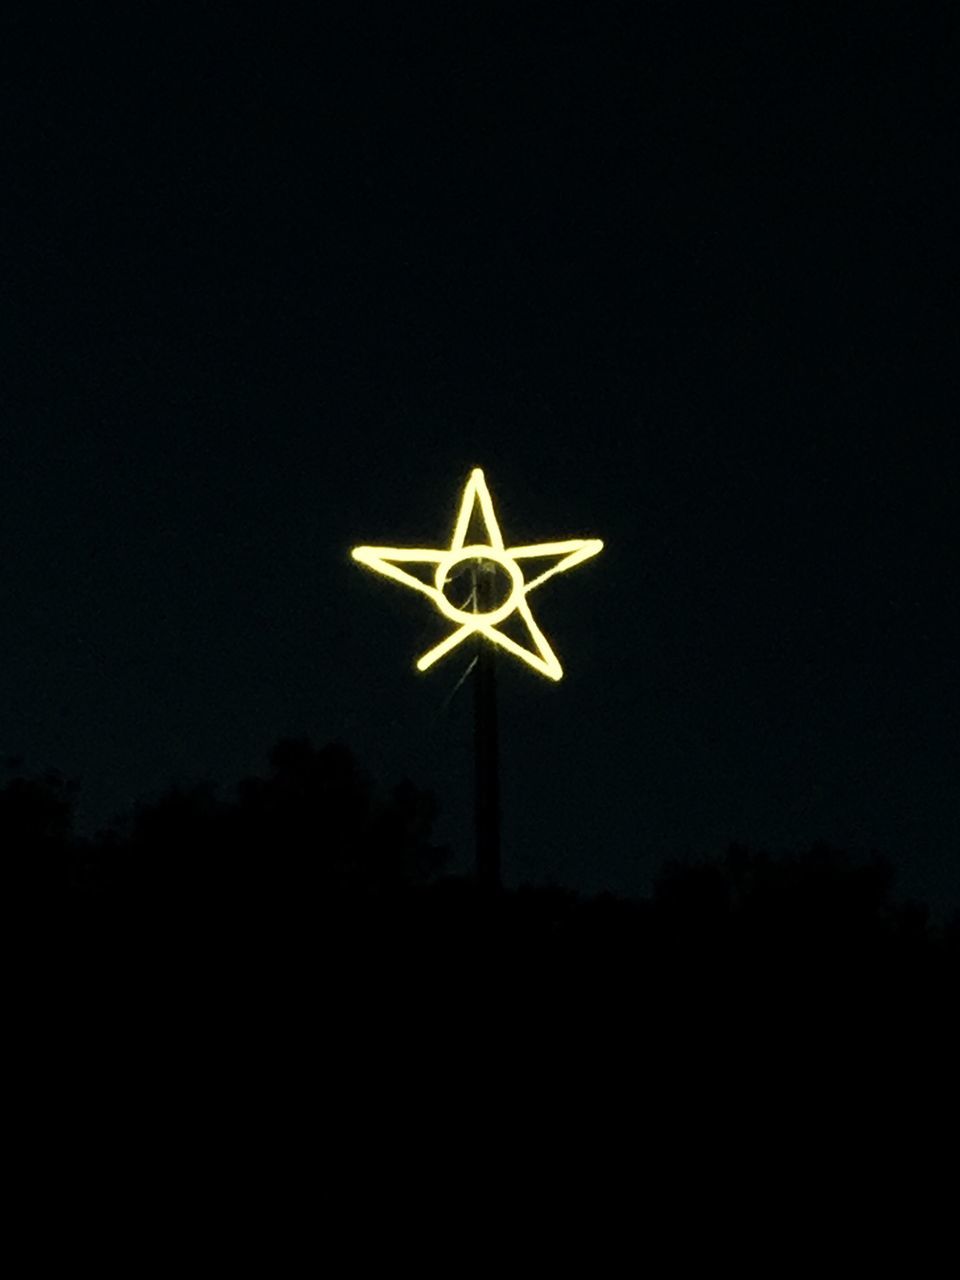 sky, star - space, tree, night, illuminated, outdoors, no people, space, astronomy